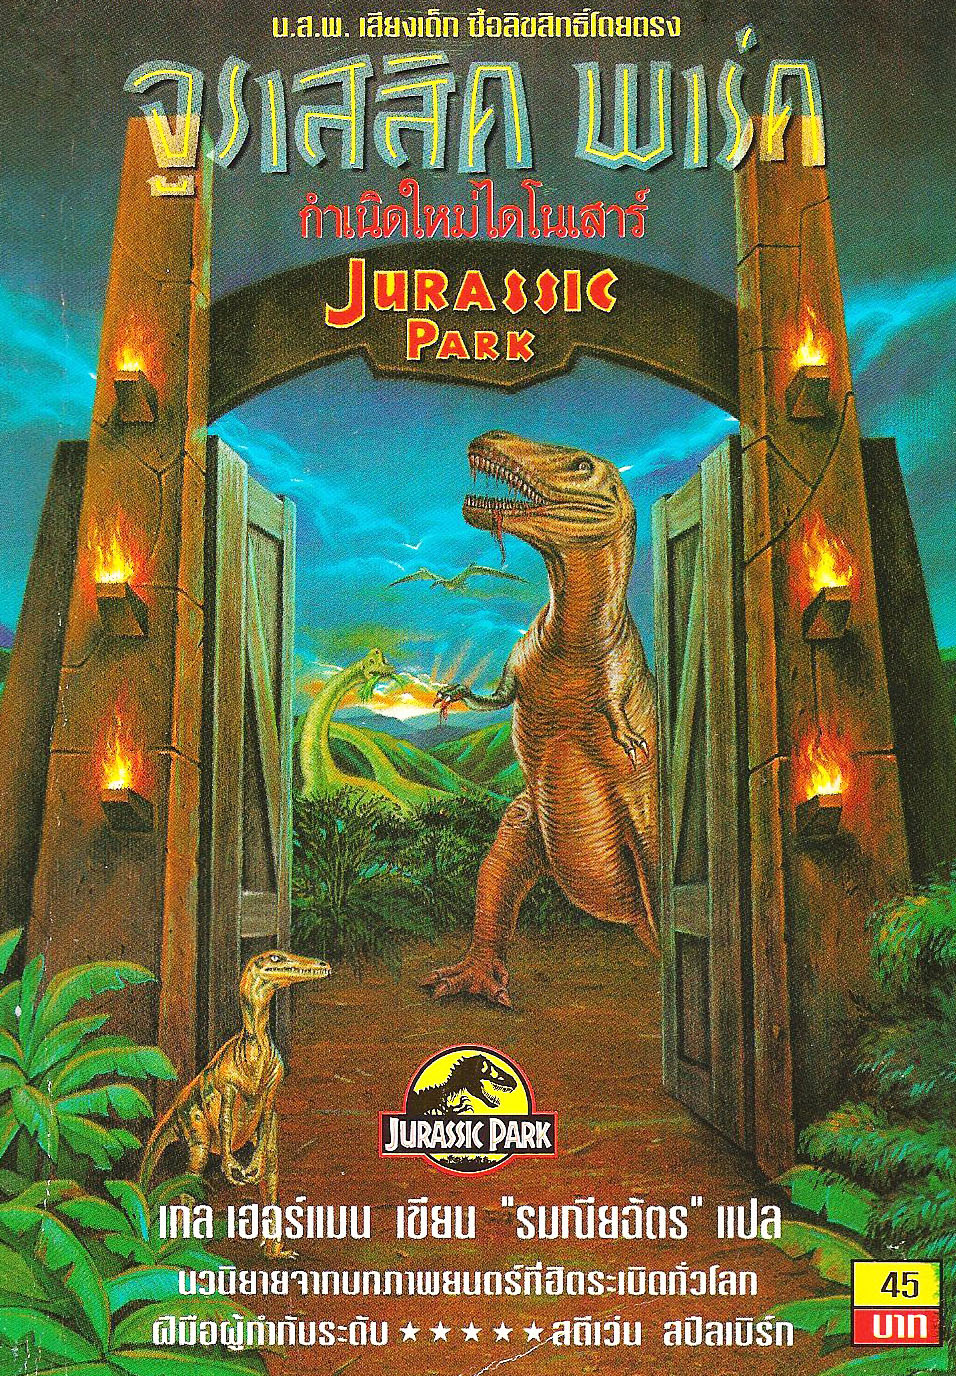 Jurassic Park
Thailand – 1996